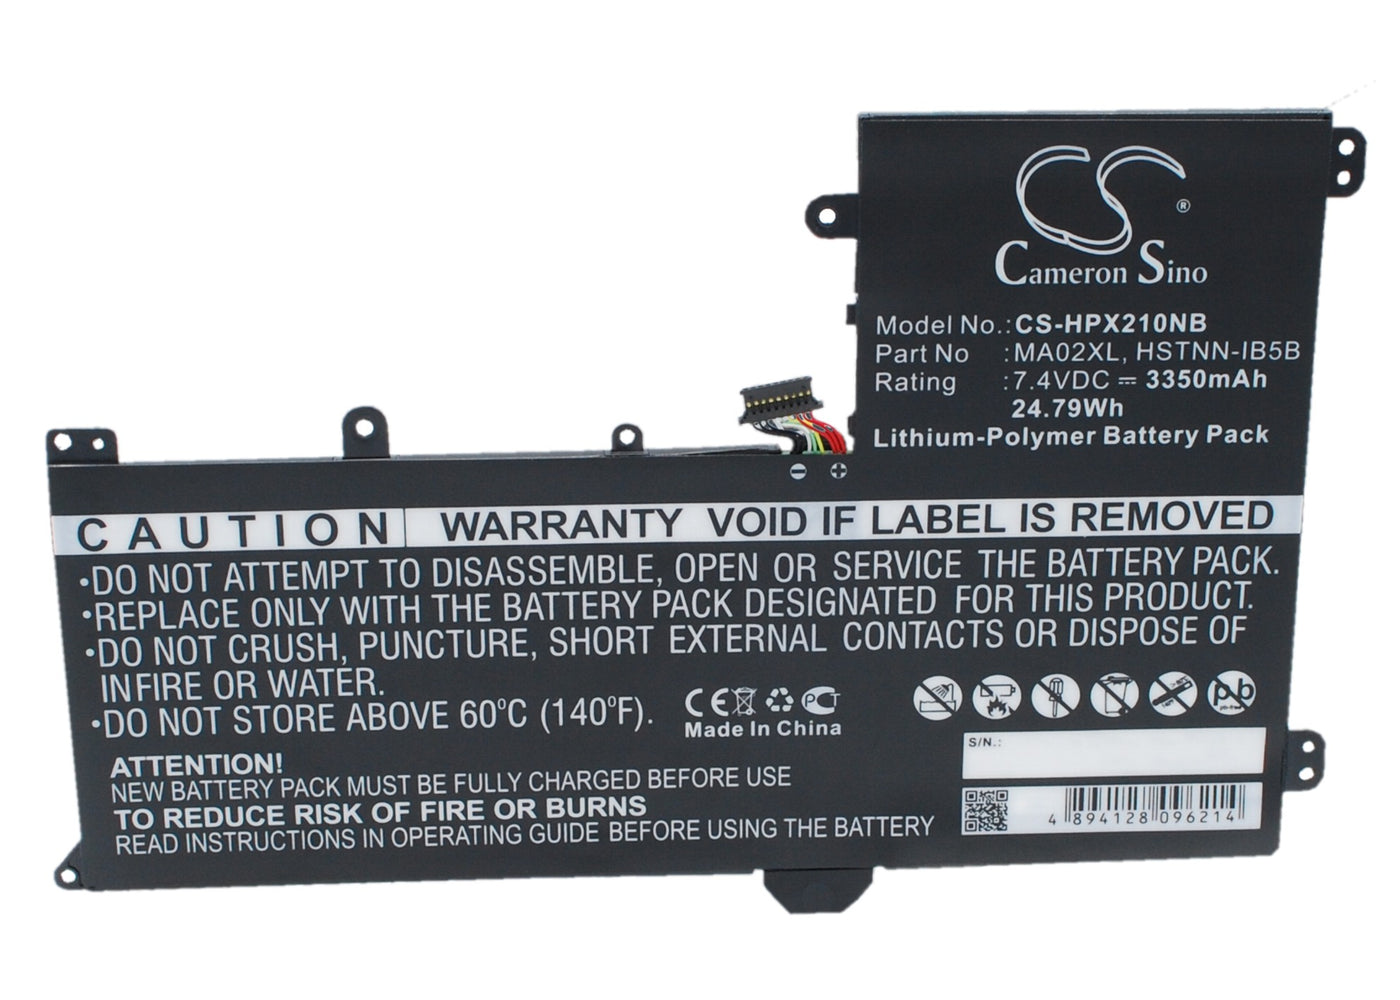 CS-HPX210NB Cameron Sino Battery